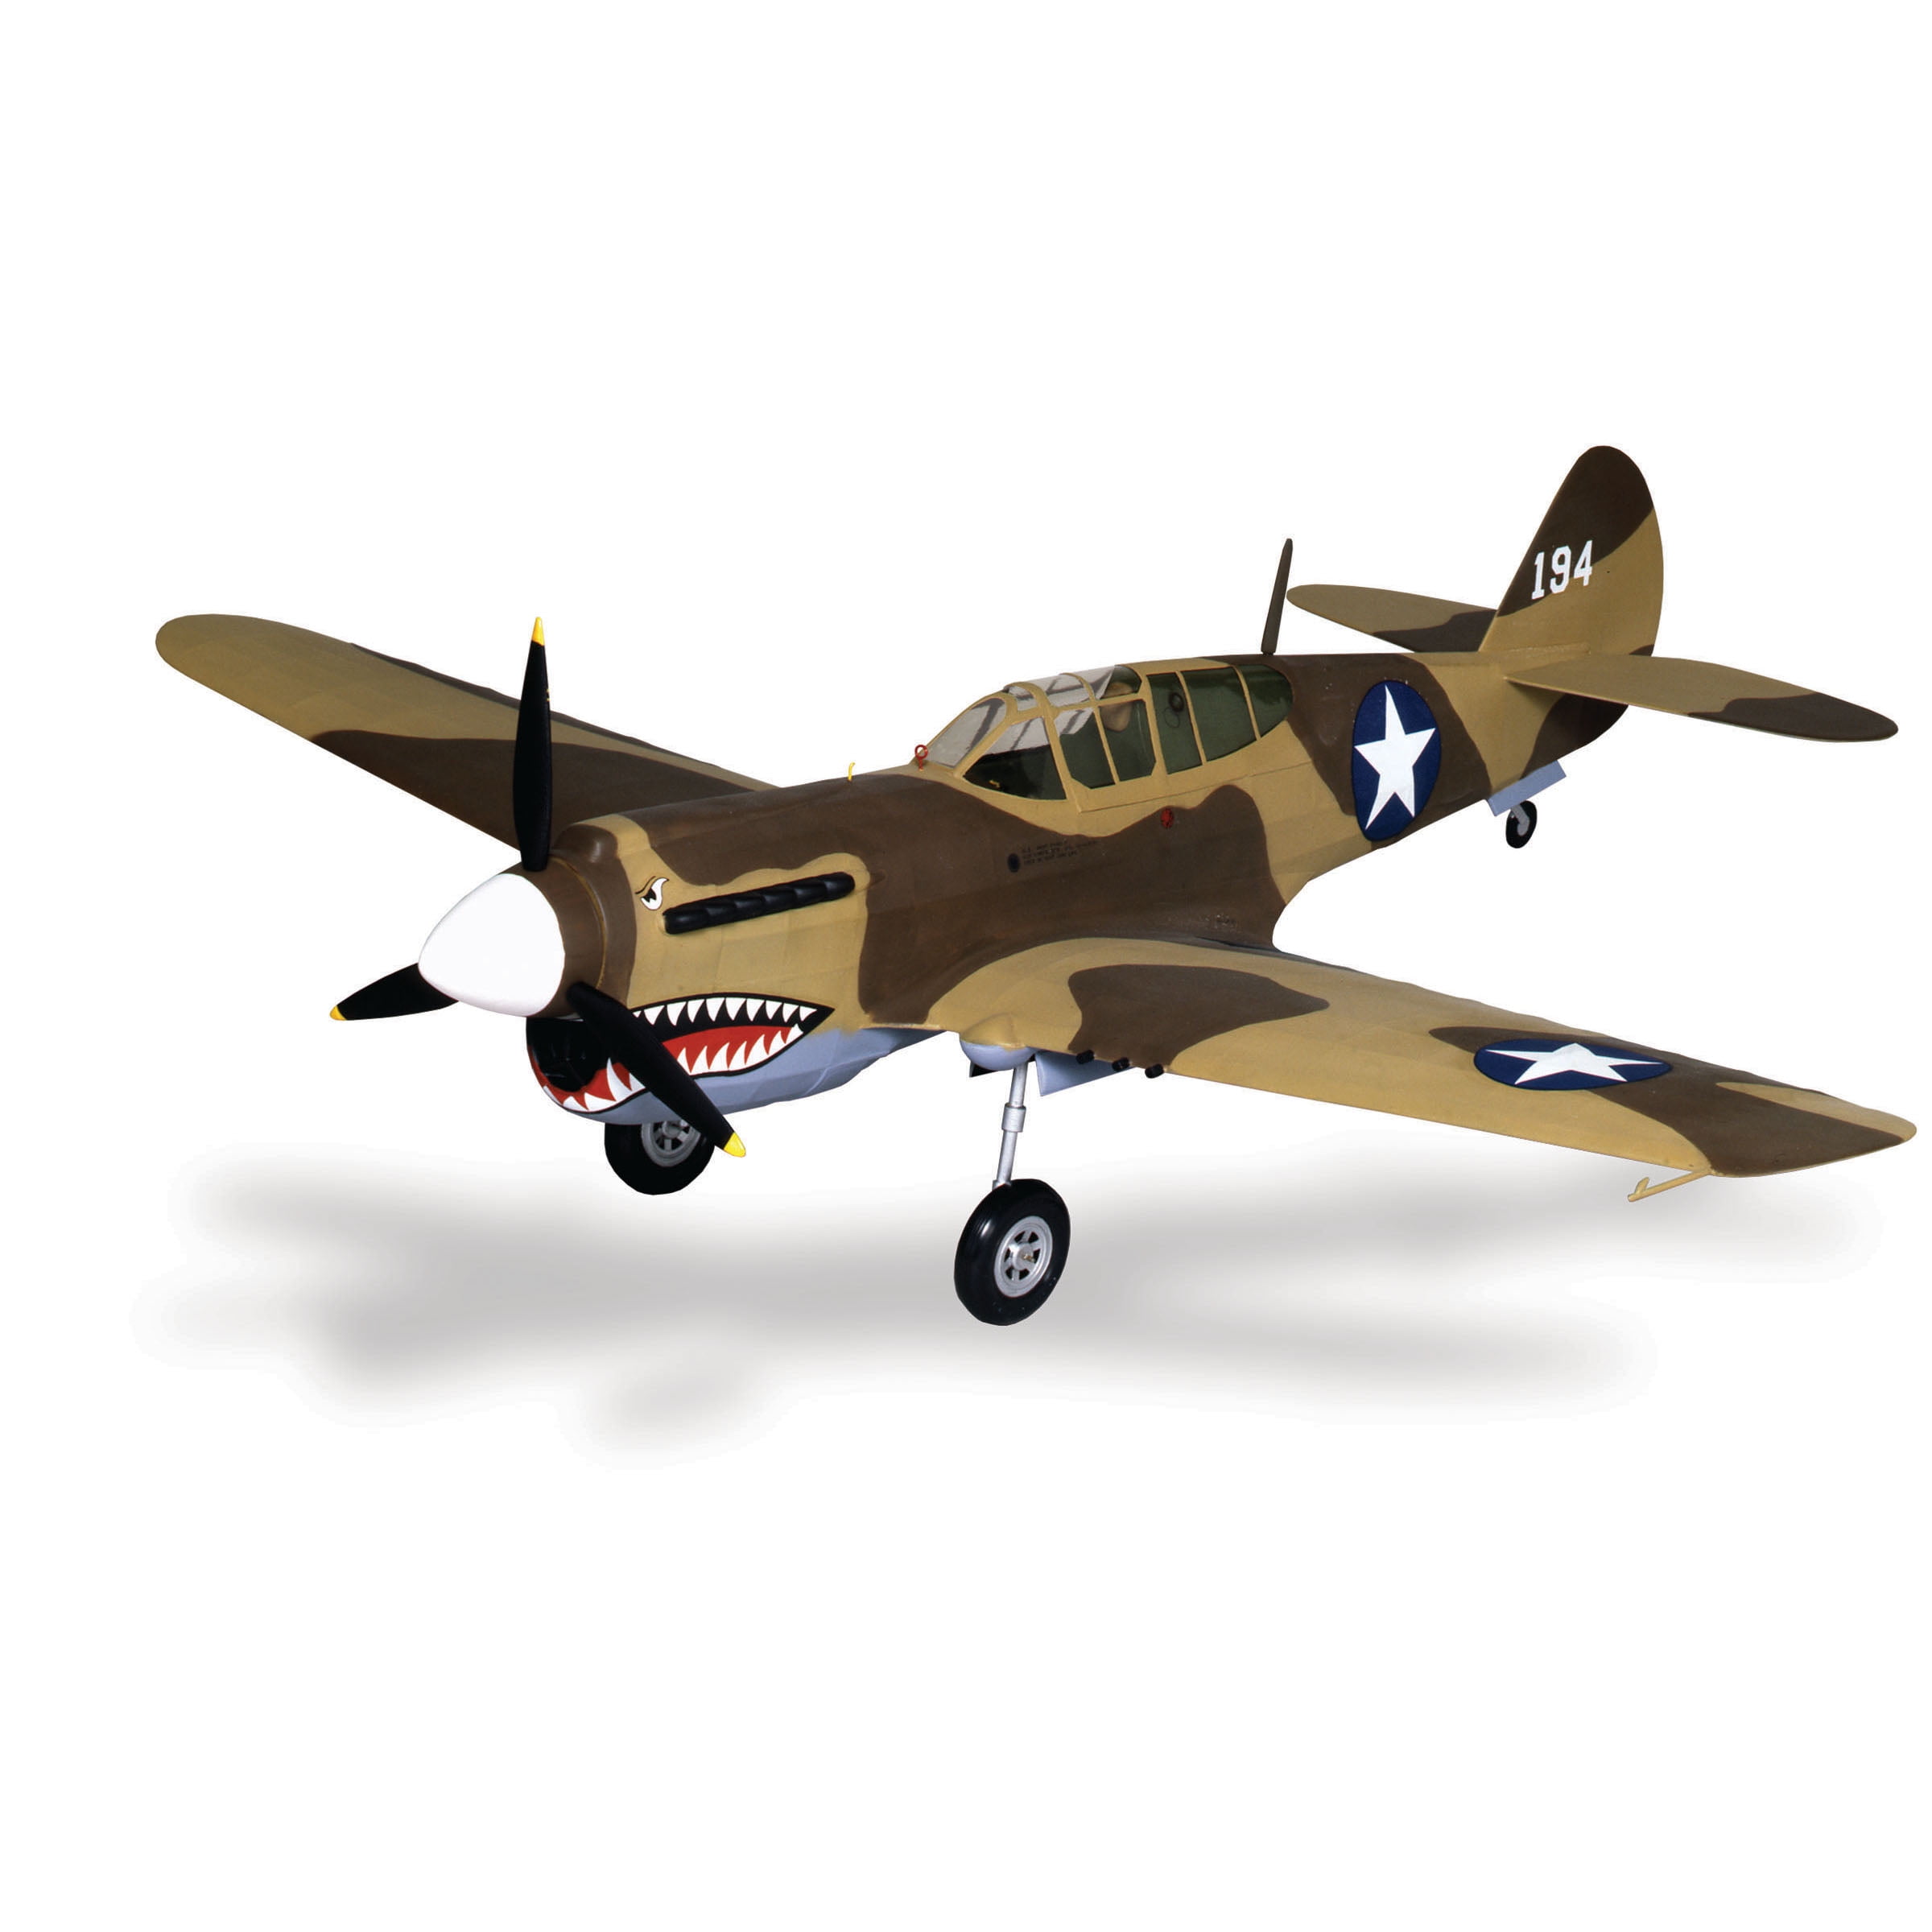 Guillow U.S Curtiss P-40 Warhawk Balsa Model Aircraft Kit 